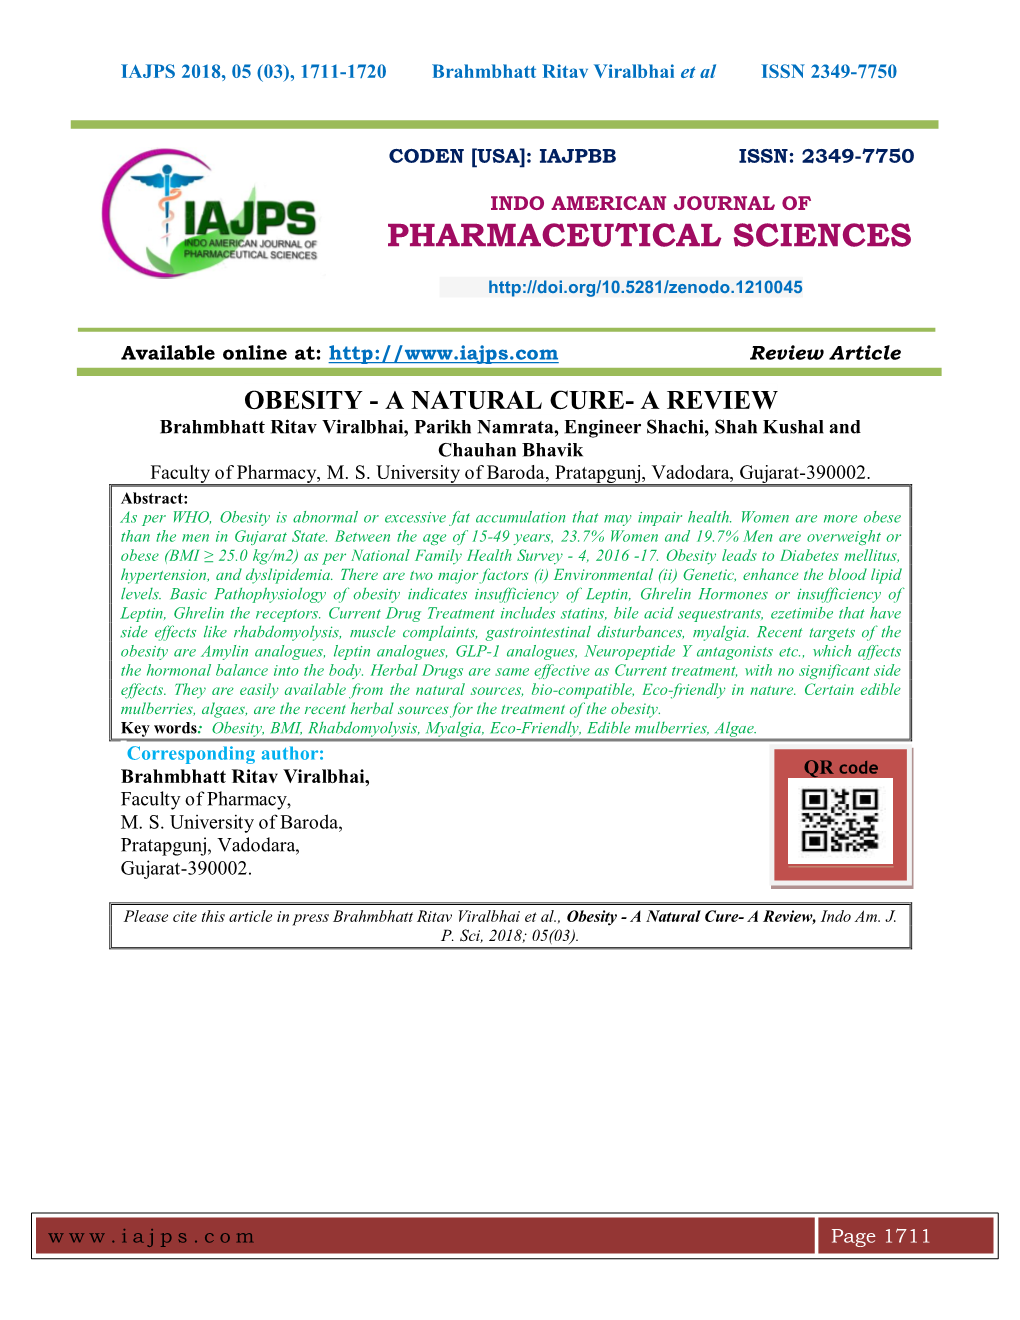 OBESITY - a NATURAL CURE- a REVIEW Brahmbhatt Ritav Viralbhai, Parikh Namrata, Engineer Shachi, Shah Kushal and Chauhan Bhavik Faculty of Pharmacy, M